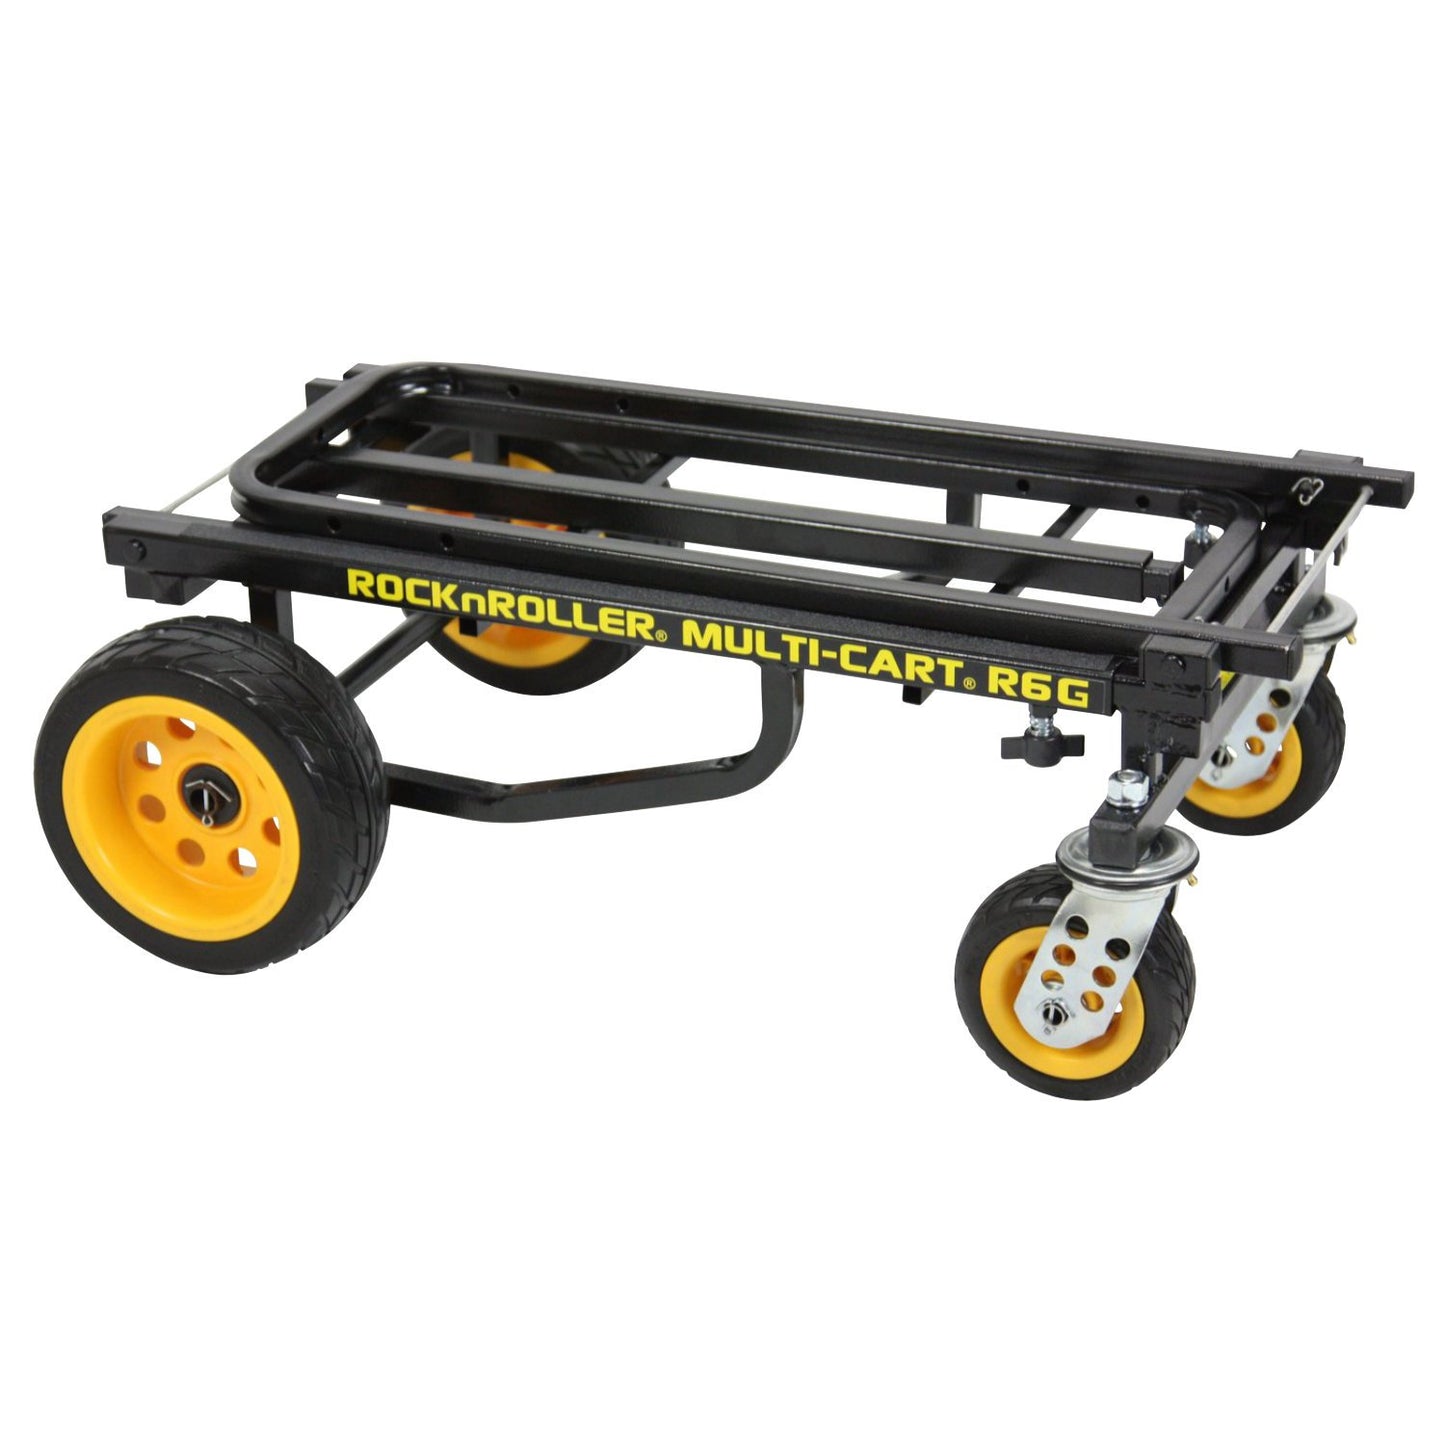 RocknRoller® Multi-Cart® R6G "Mini Ground Glider"